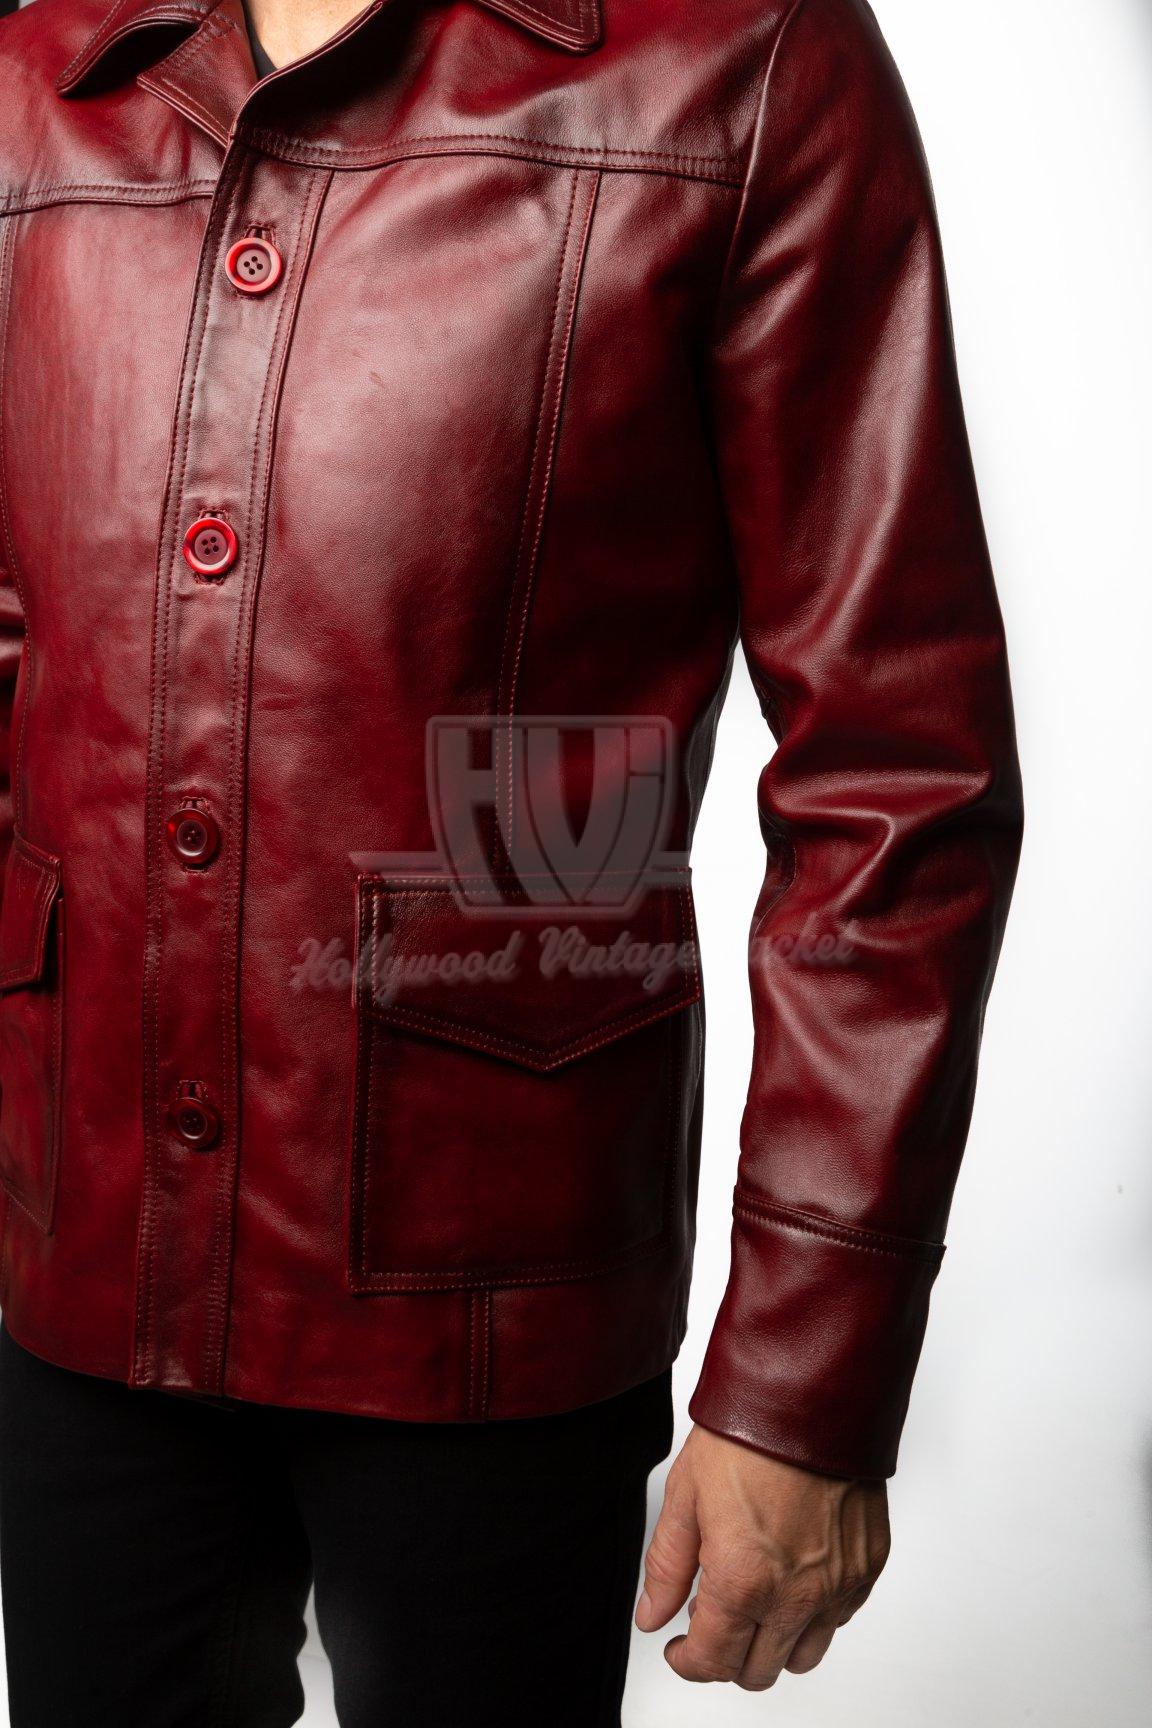 Fight Club red leather jacket | Tyler Durden - Hollywood Vintage Jacket